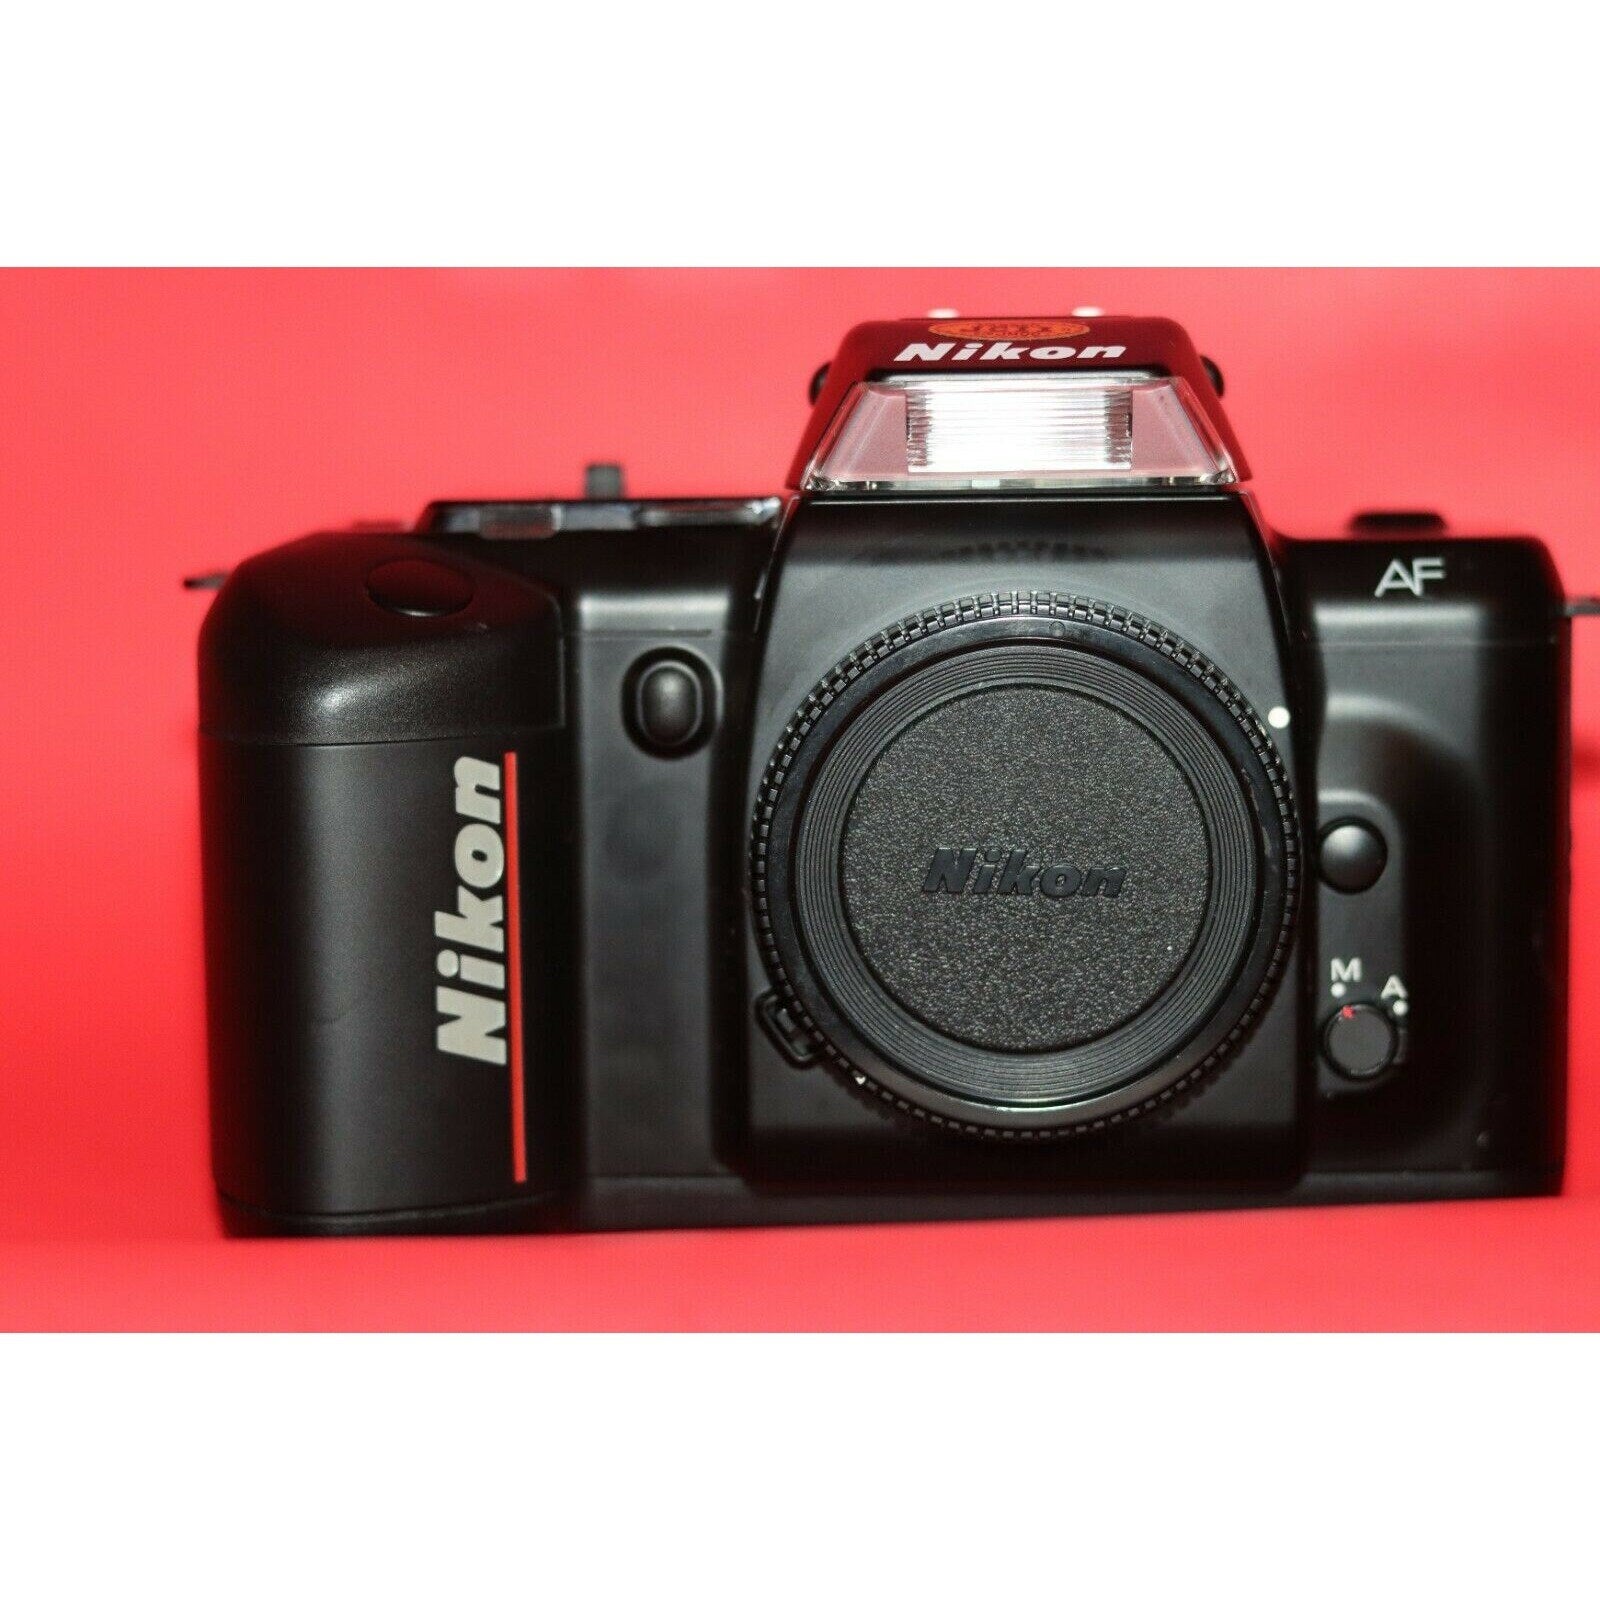 Nikon N4004 AF SLR 35mm Film Camera Body